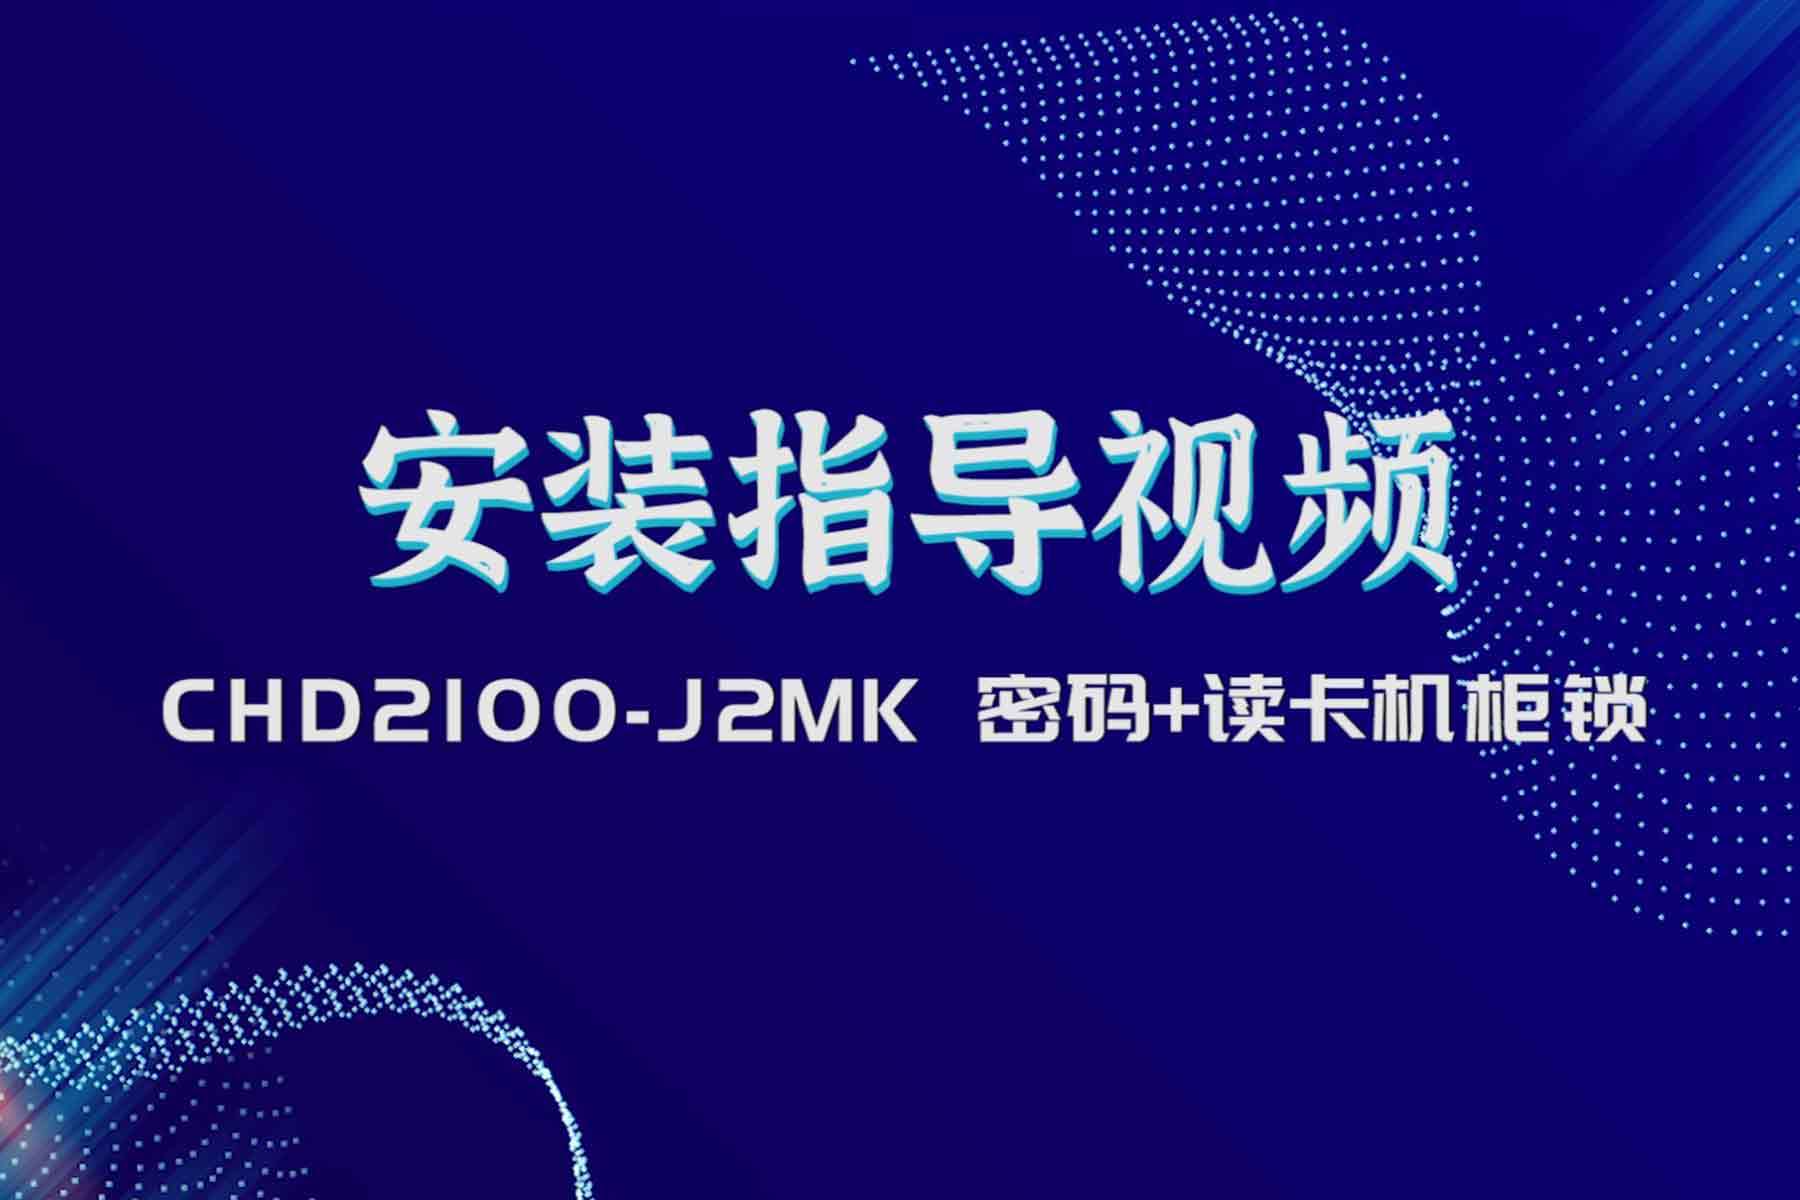 2100-J2MK安装指导视频